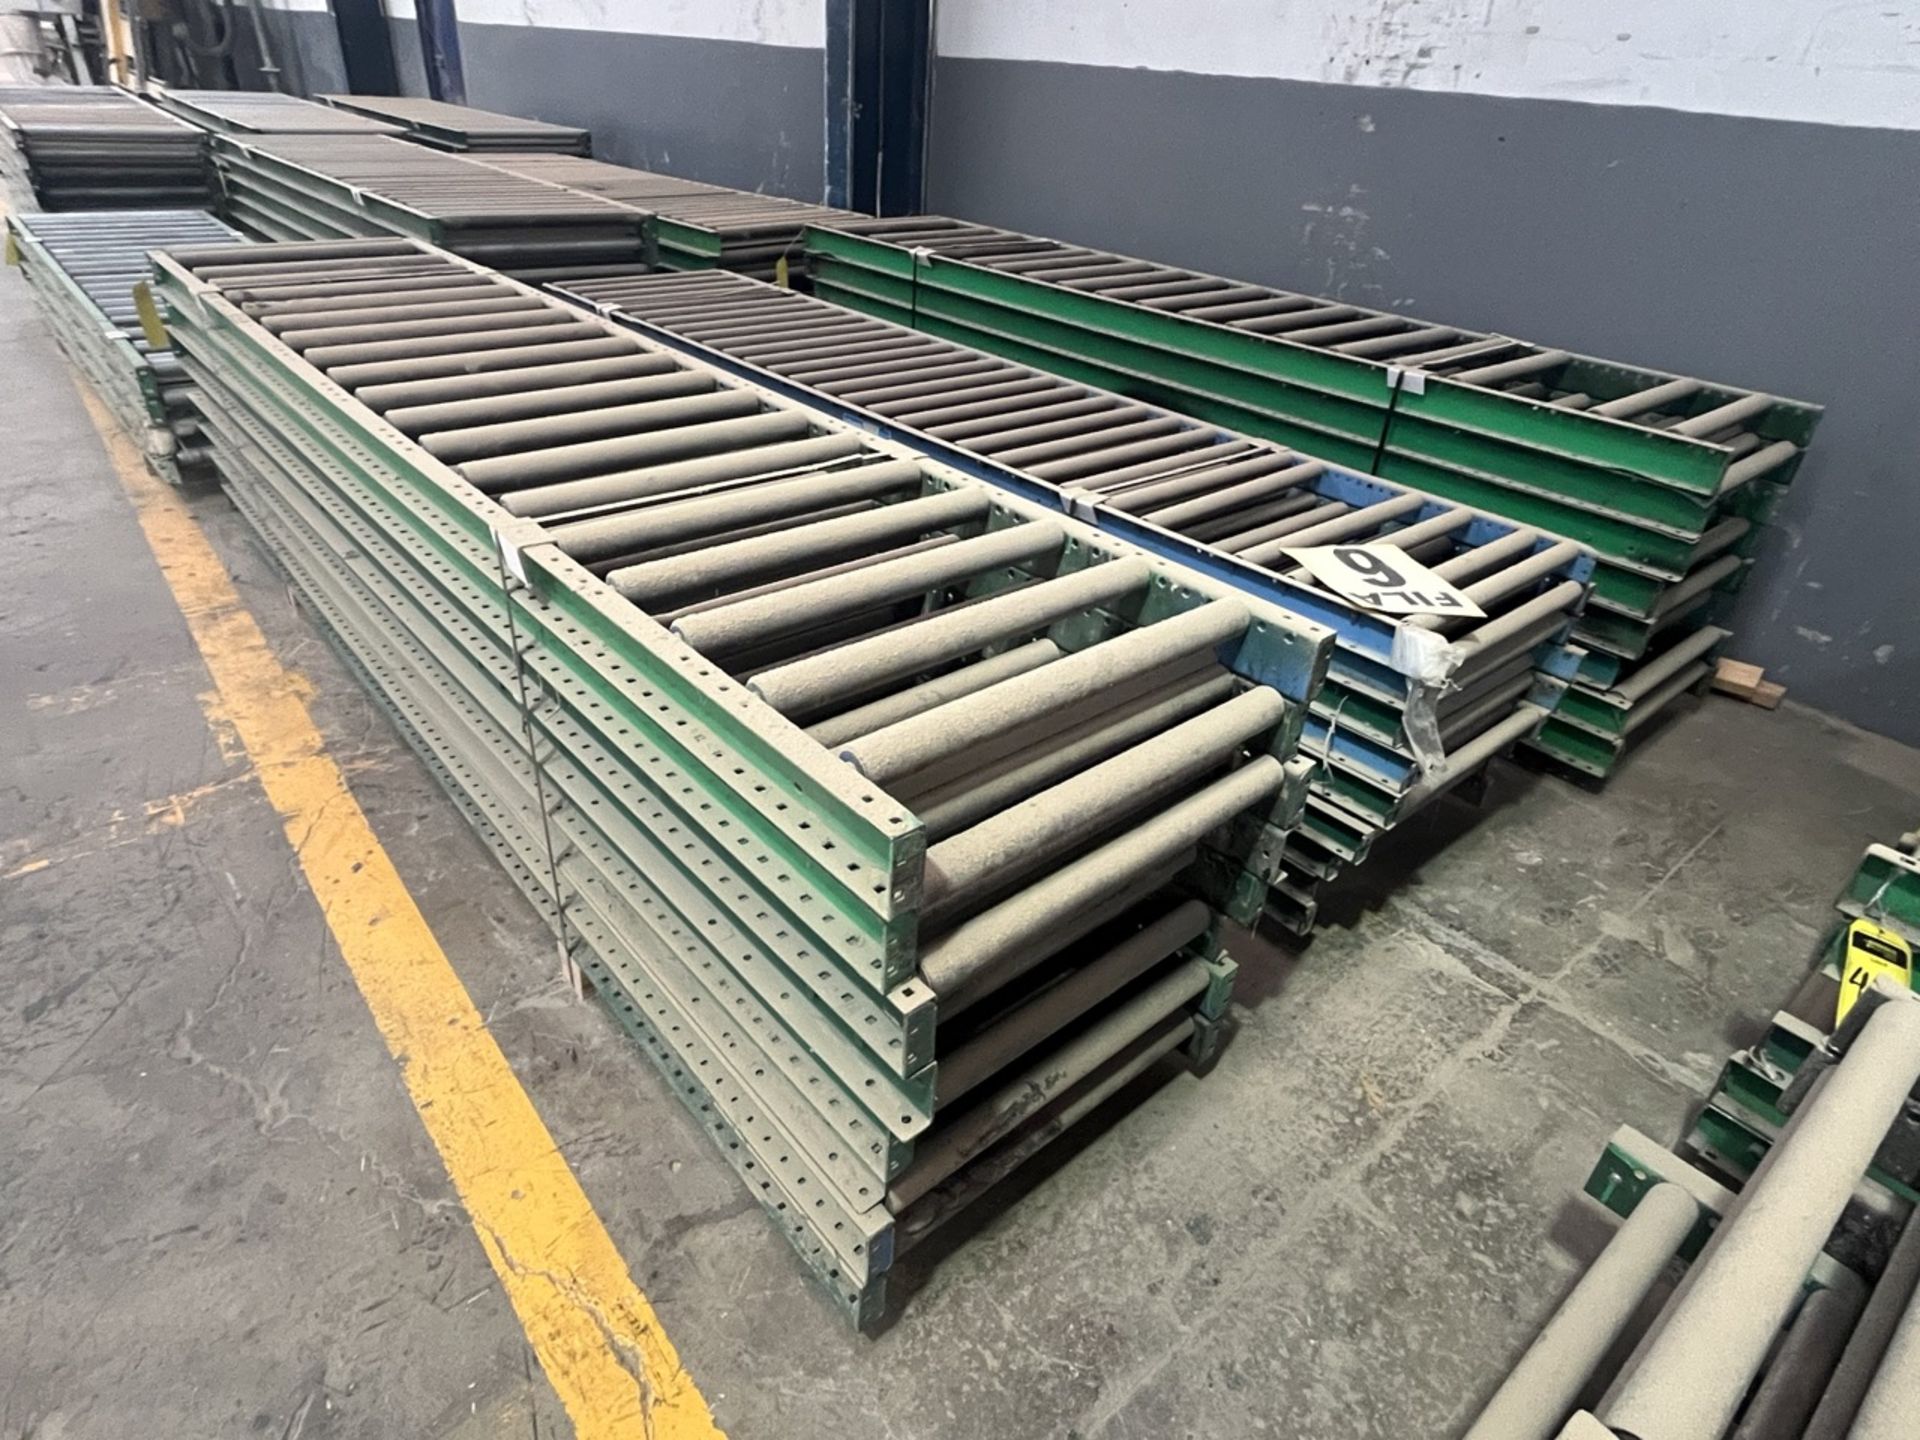 25 pieces of roller conveyor belt measuring approx. 65 cm wide x 3.05 m long each. / 25 Piezas de b - Image 3 of 5